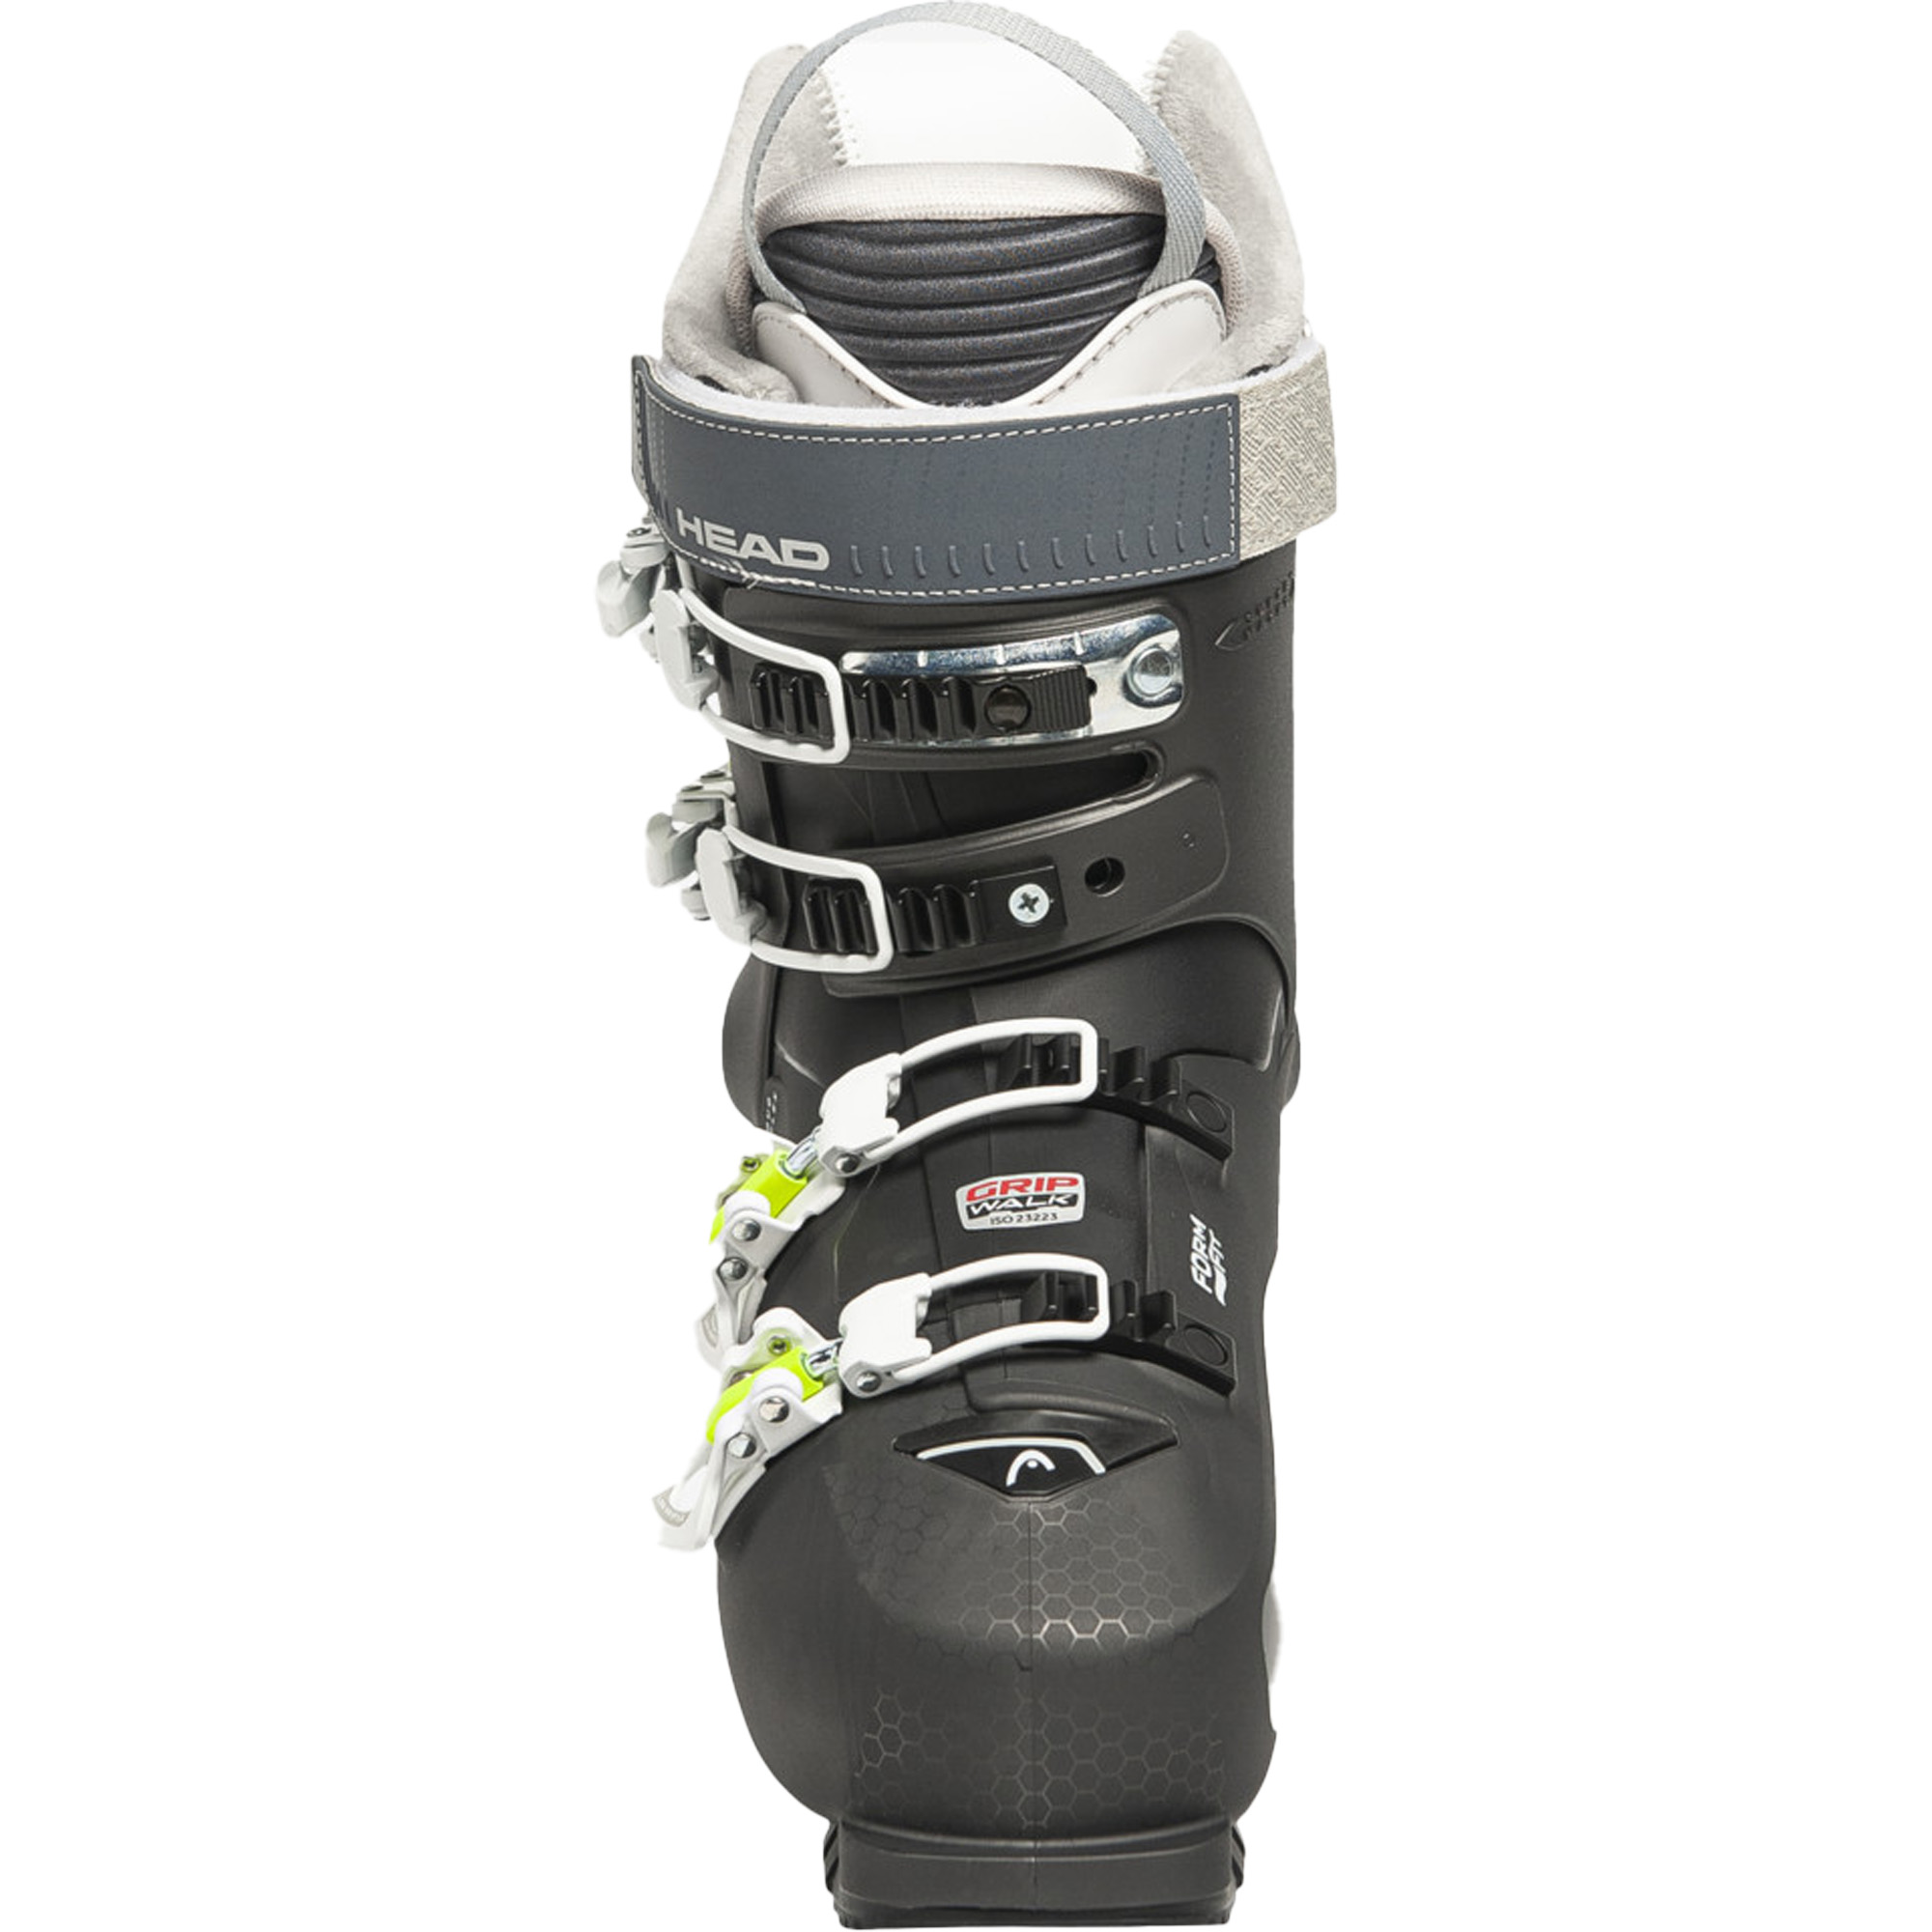 Head Edge LYT 100 GW Women's GripWalk Ski Boots